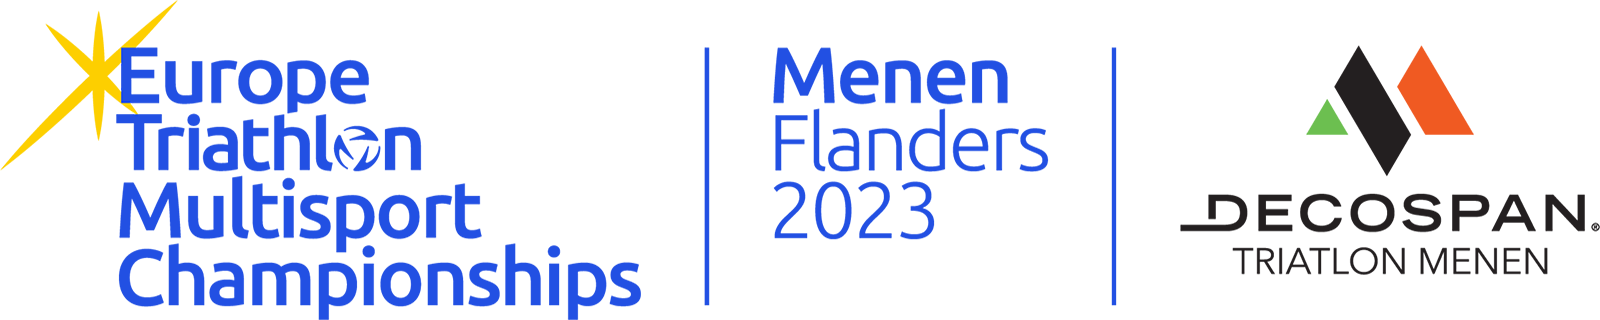 2023 European Multisport Championships, Menen